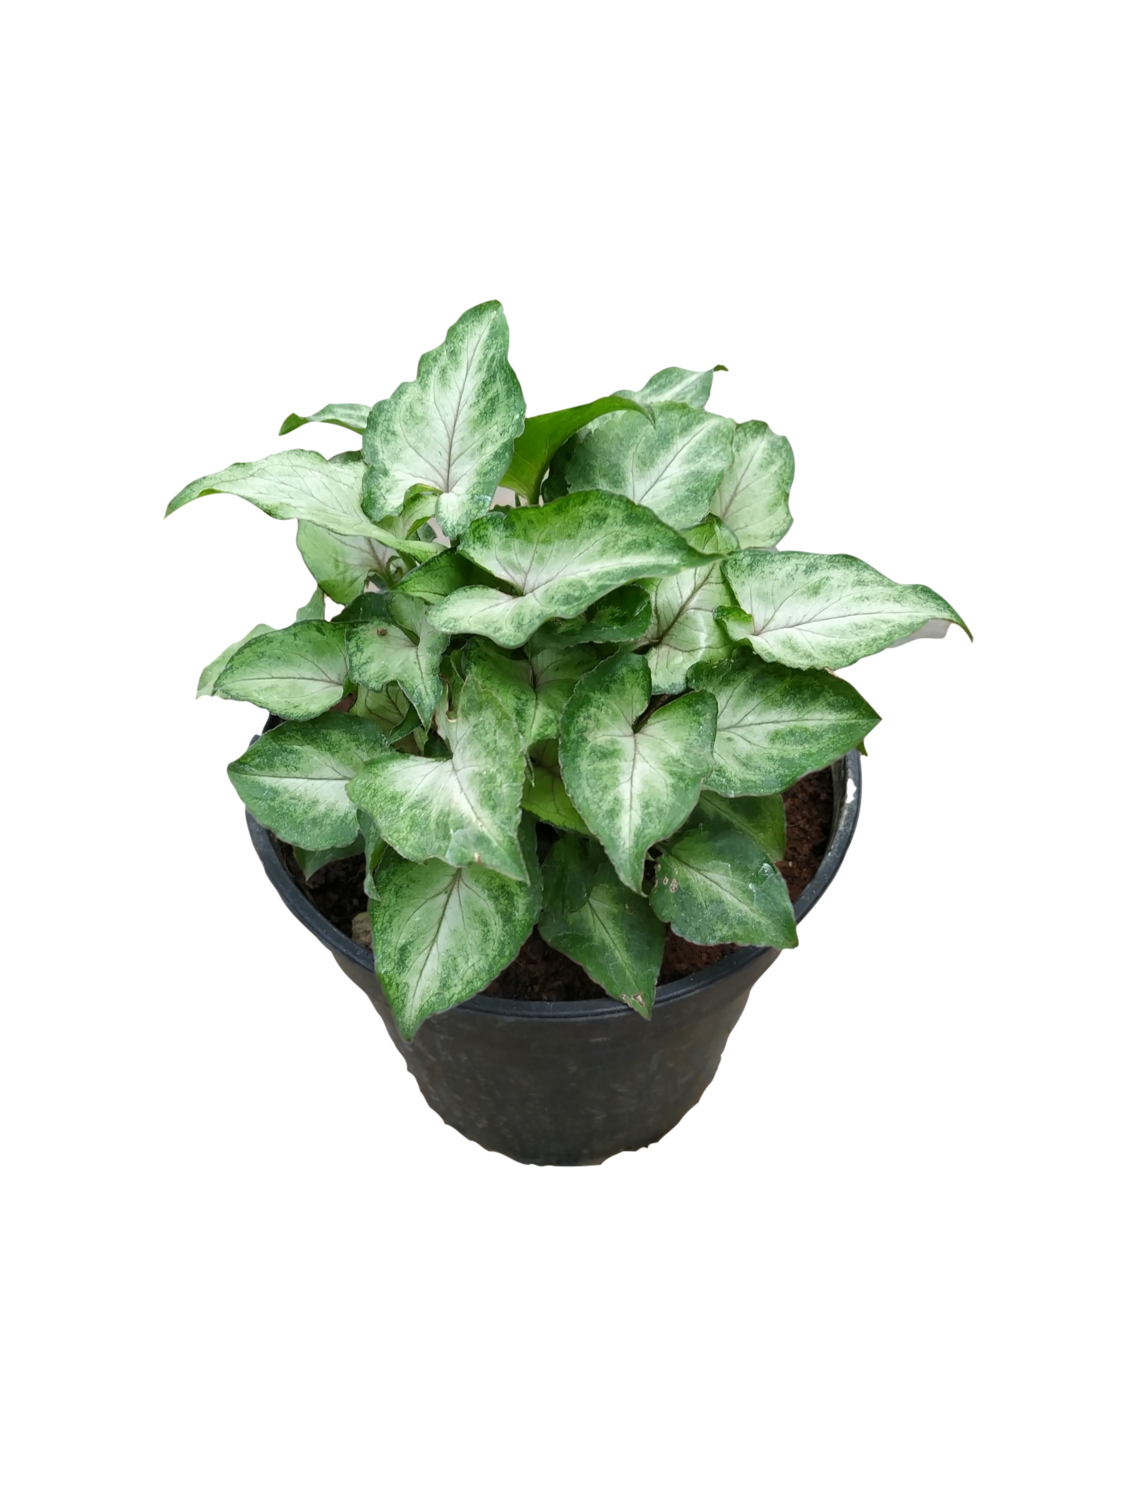 Syngonium Mini Pixie- Dwarf Variety Plant in 4 inches Nursery Pot